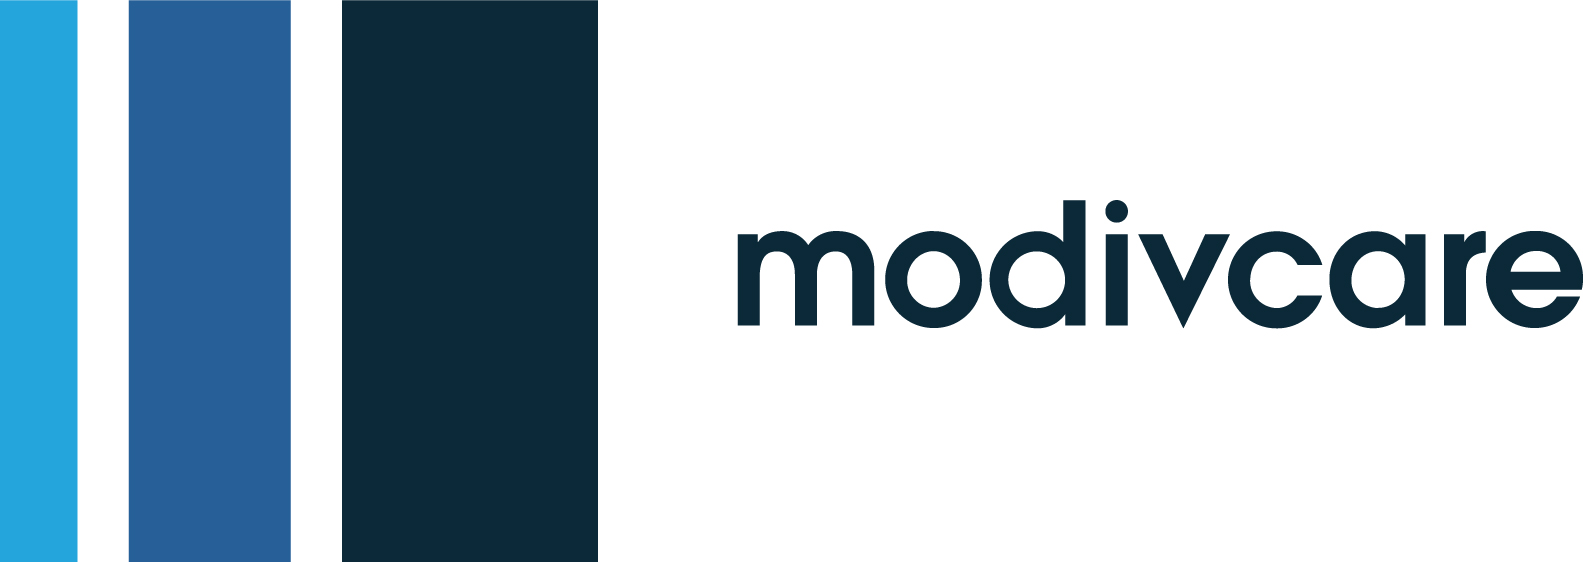 Modivcare_Logo.jpg